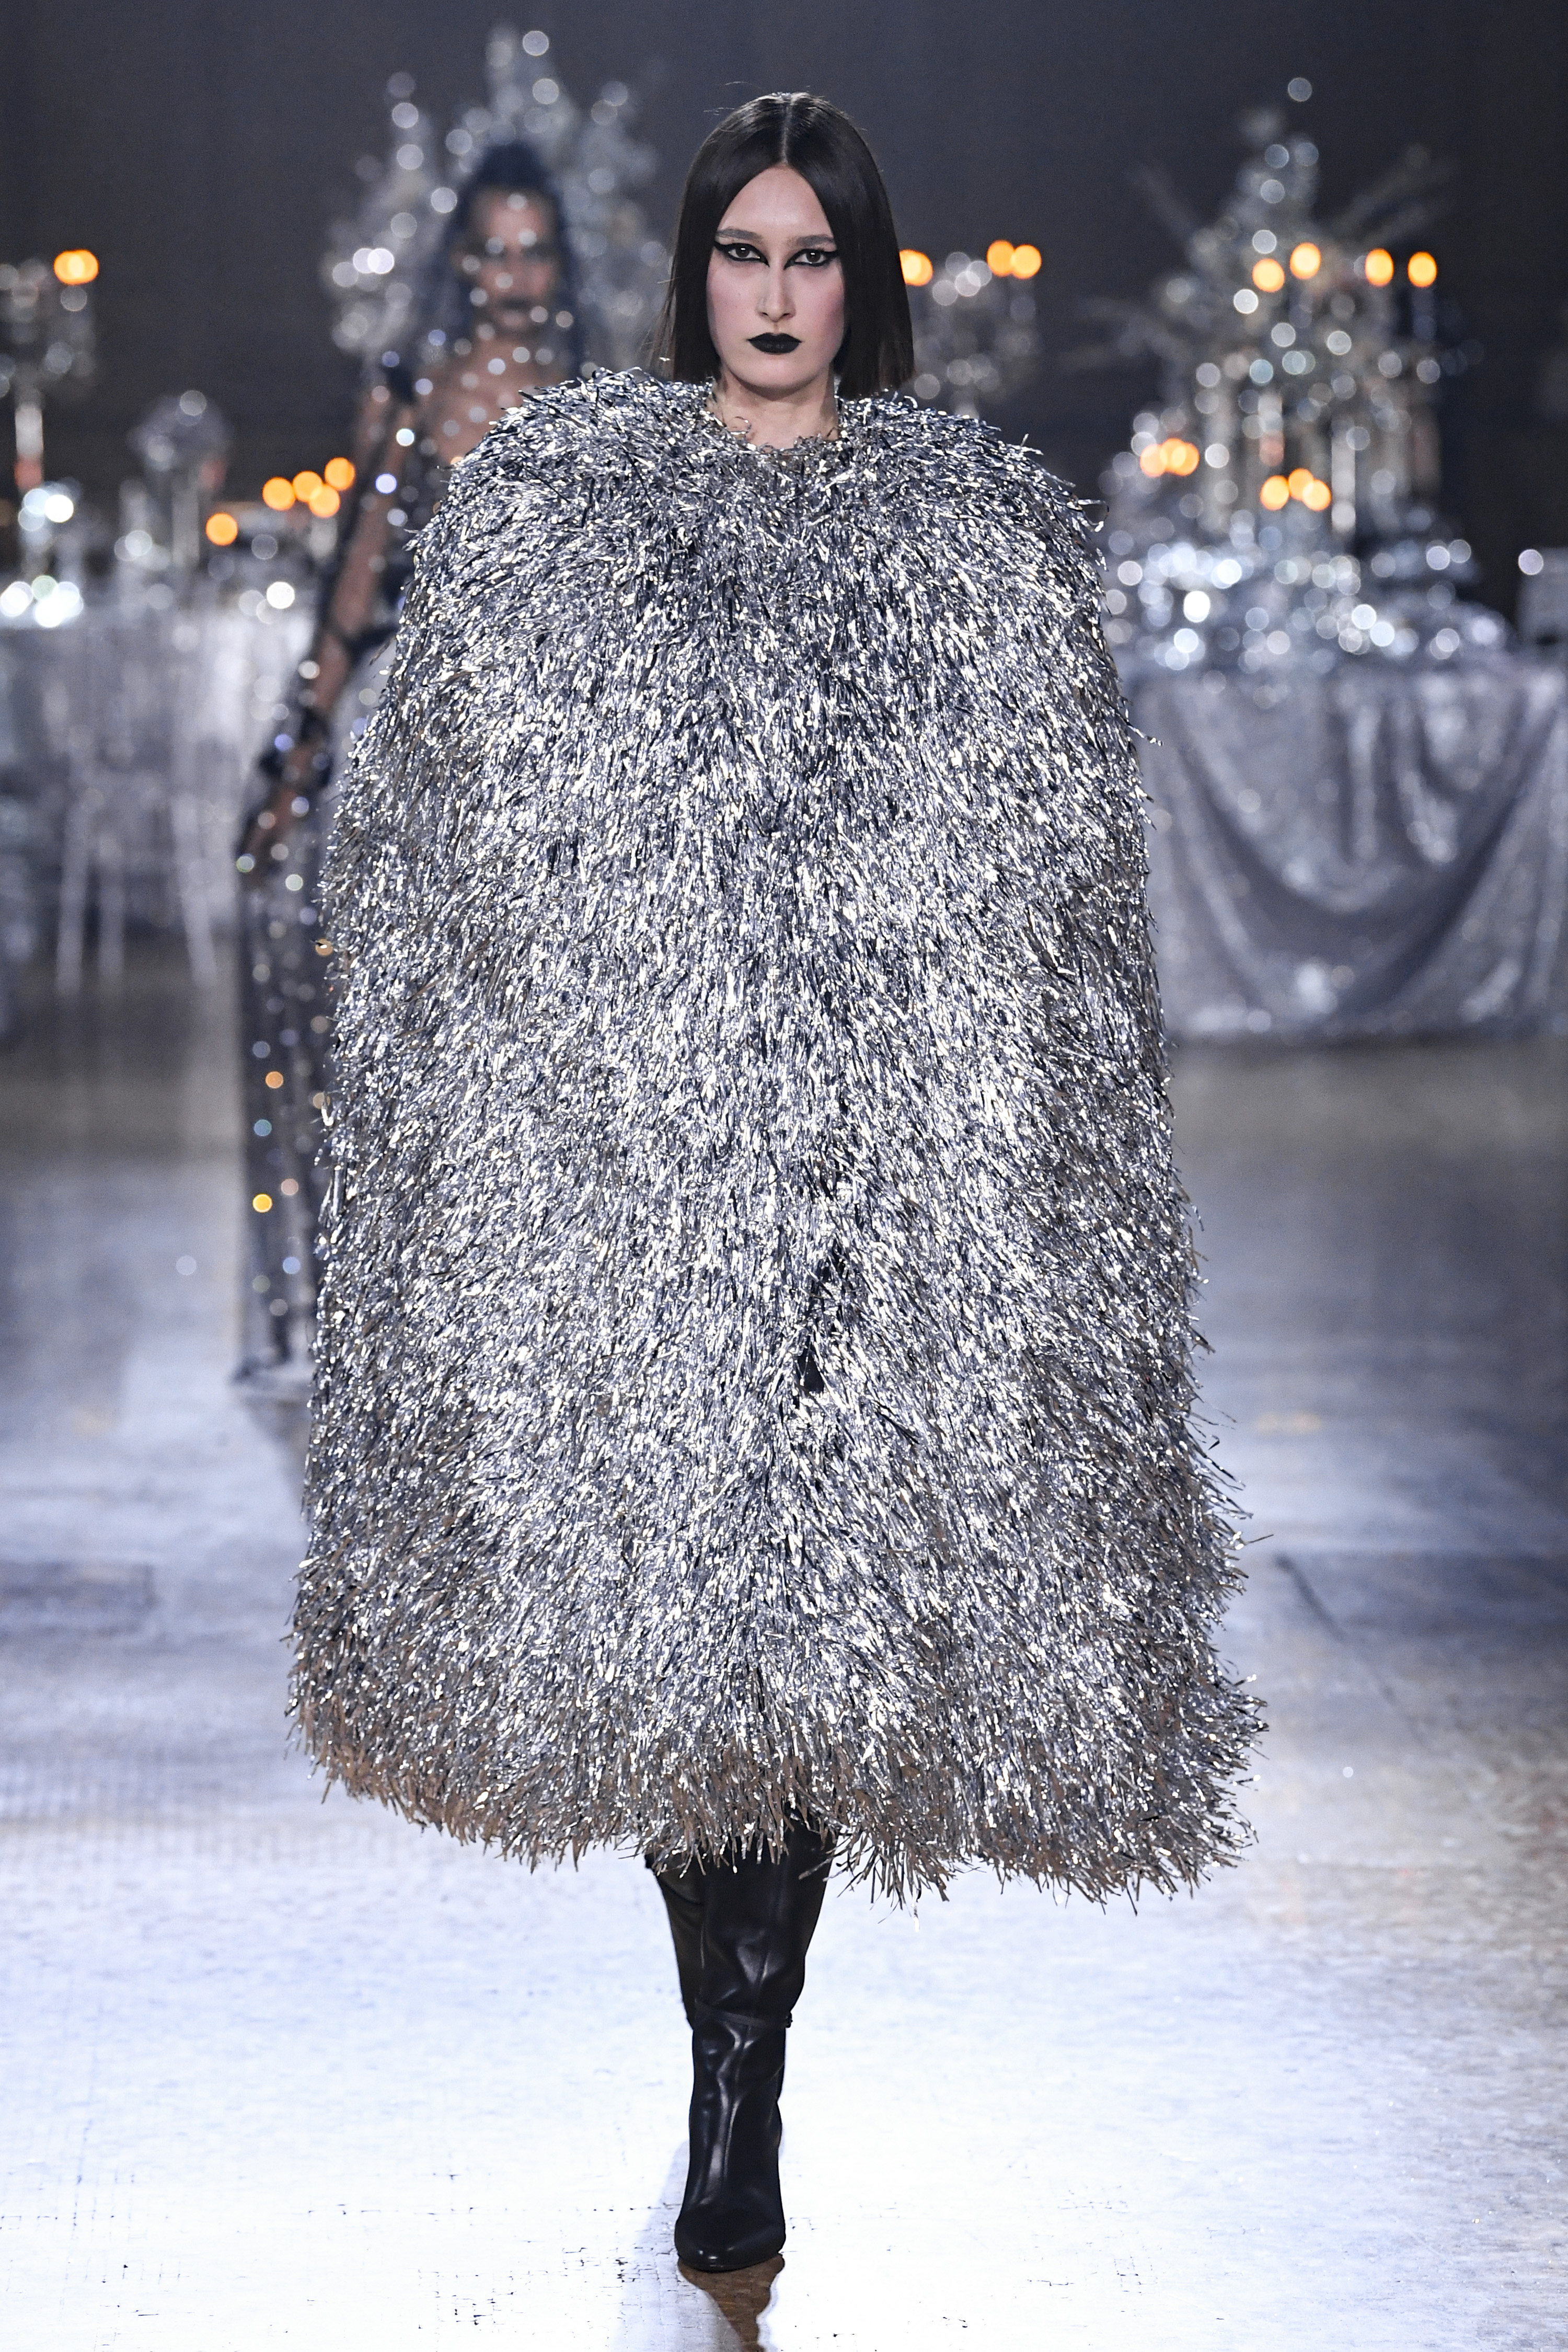 Duda Rubert marca presença no New York Fashion Week – Contei